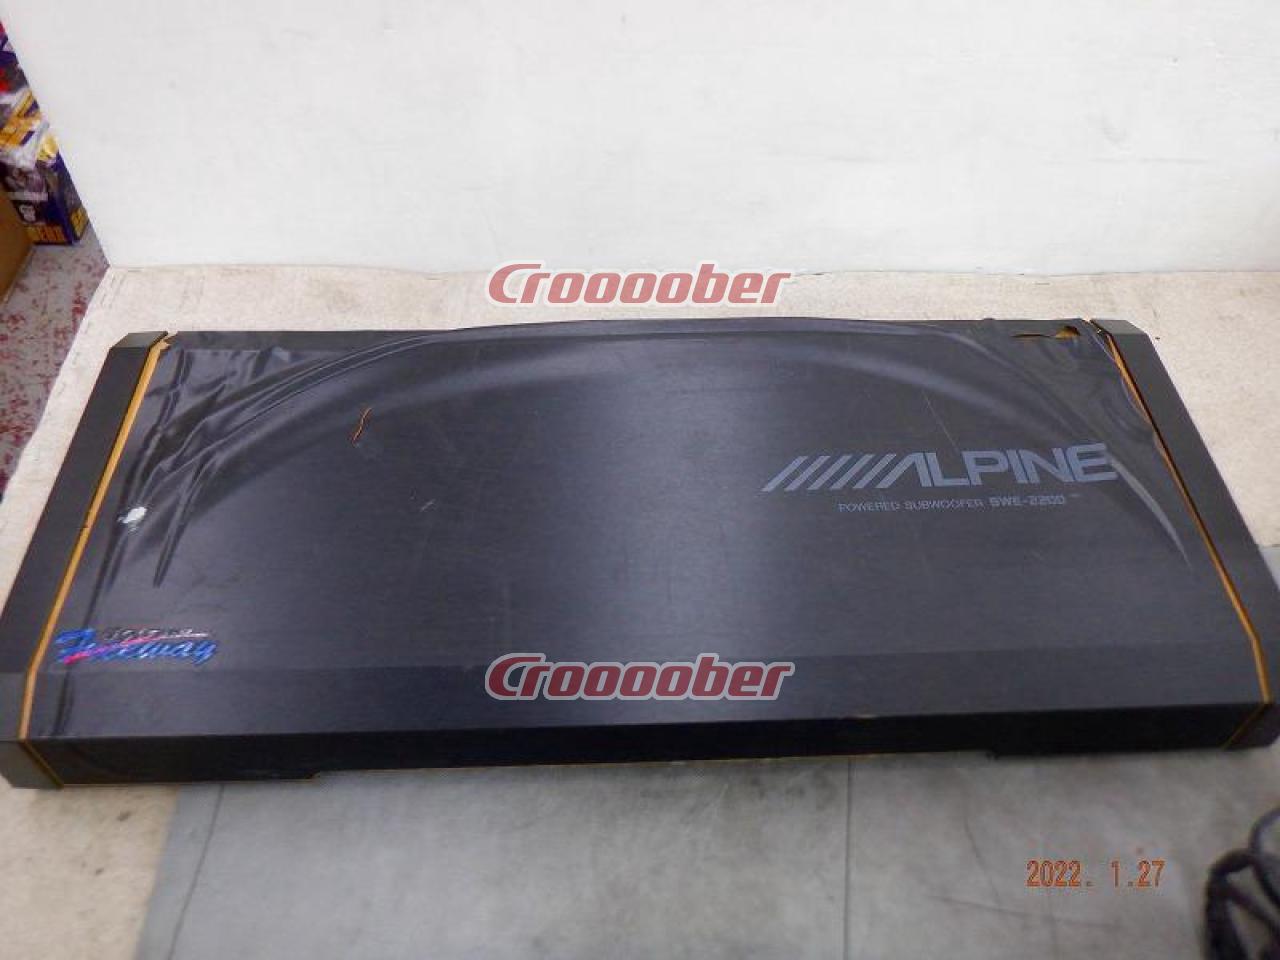 Alpine SWE-2200 | Built in AMP Sub Woofer Speakers | Croooober